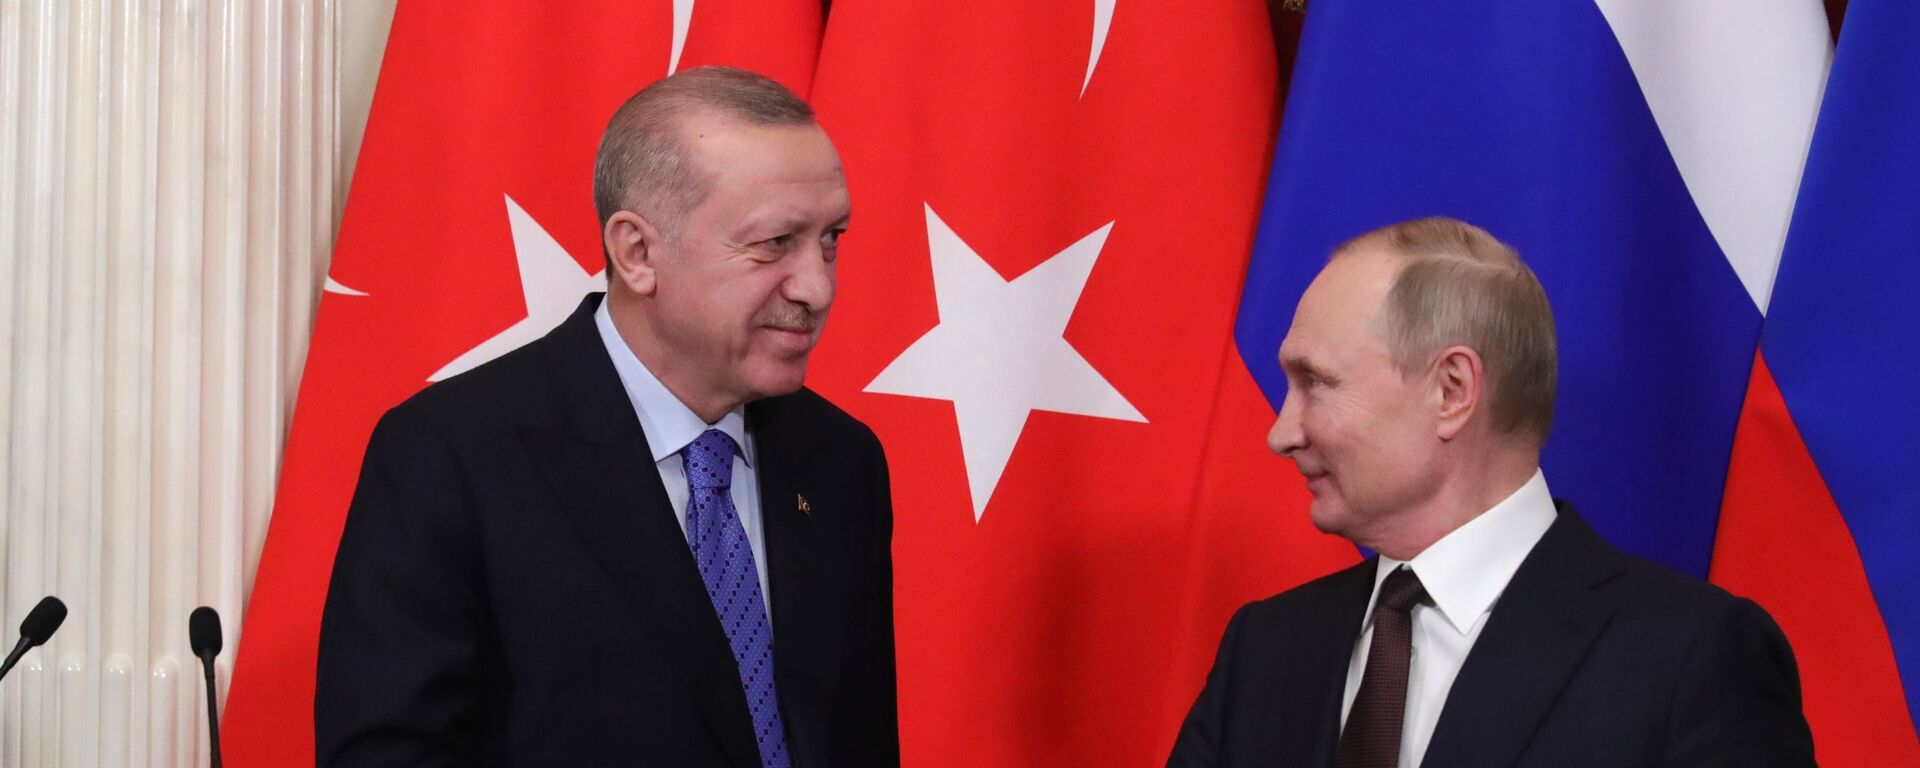 Президент РФ Владимир Путин и президент Турции Реджеп Тайип Эрдоган, фото из архива - Sputnik Азербайджан, 1920, 30.05.2022